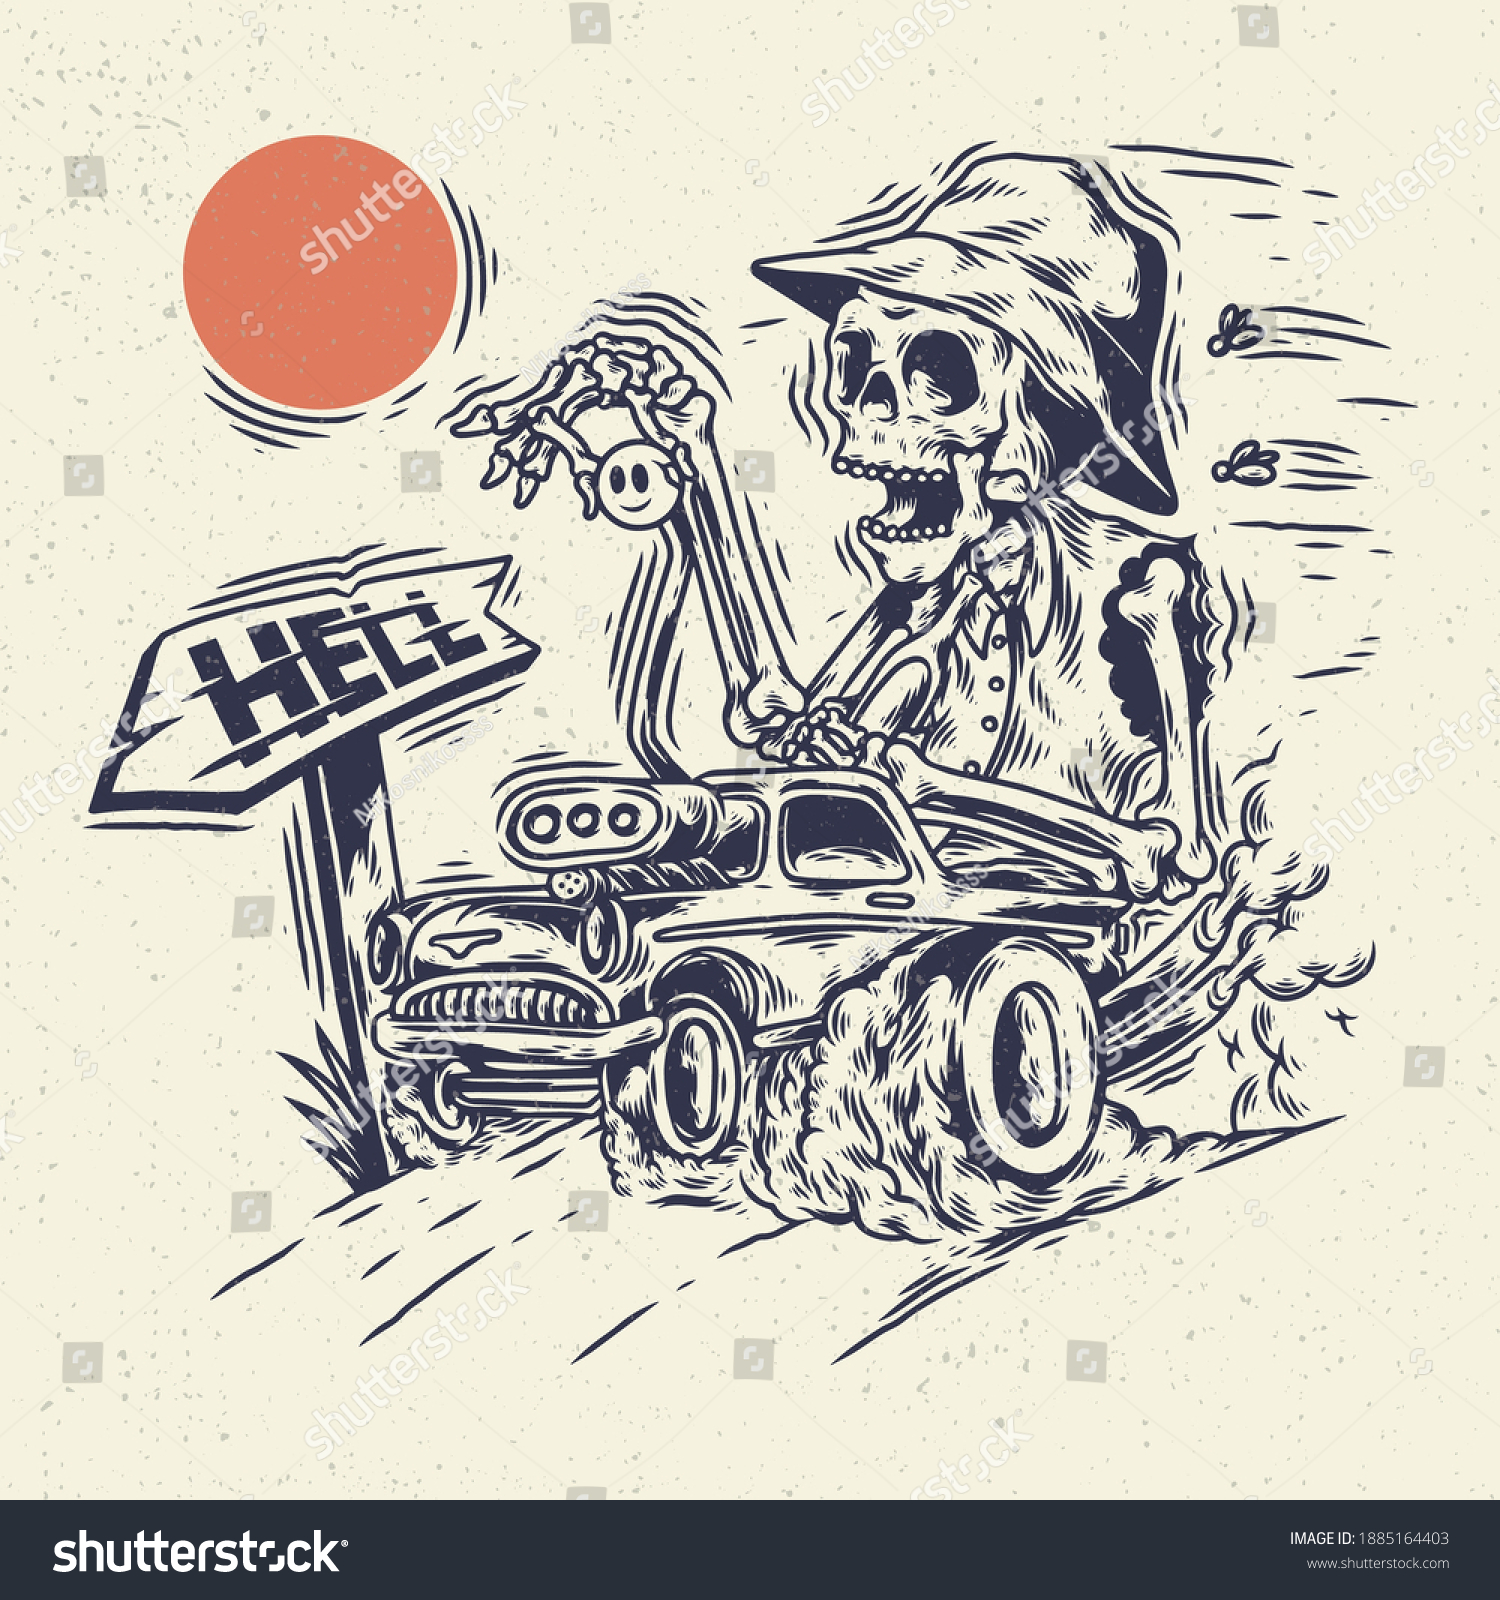 SVG of Hand drawing illustration skeleton skull, the concept from skeleton riding the hot rod car. Design for tshirt design or merchandise svg